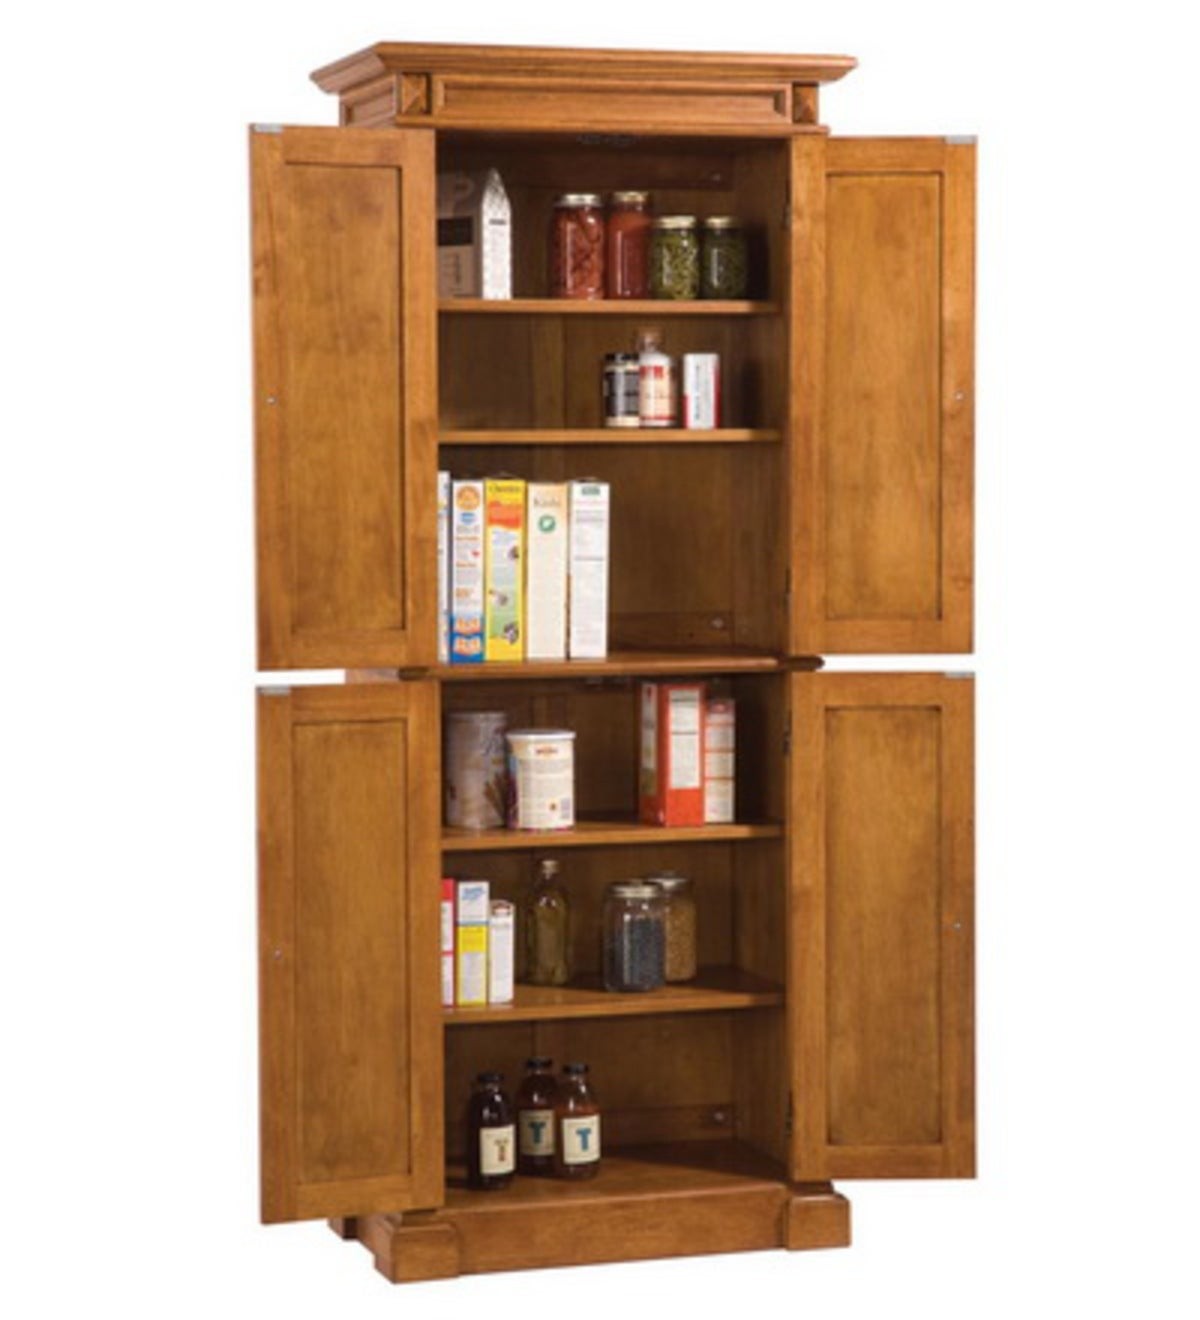 Free standing kitchen storage cabinets details about pantry storage cabinet